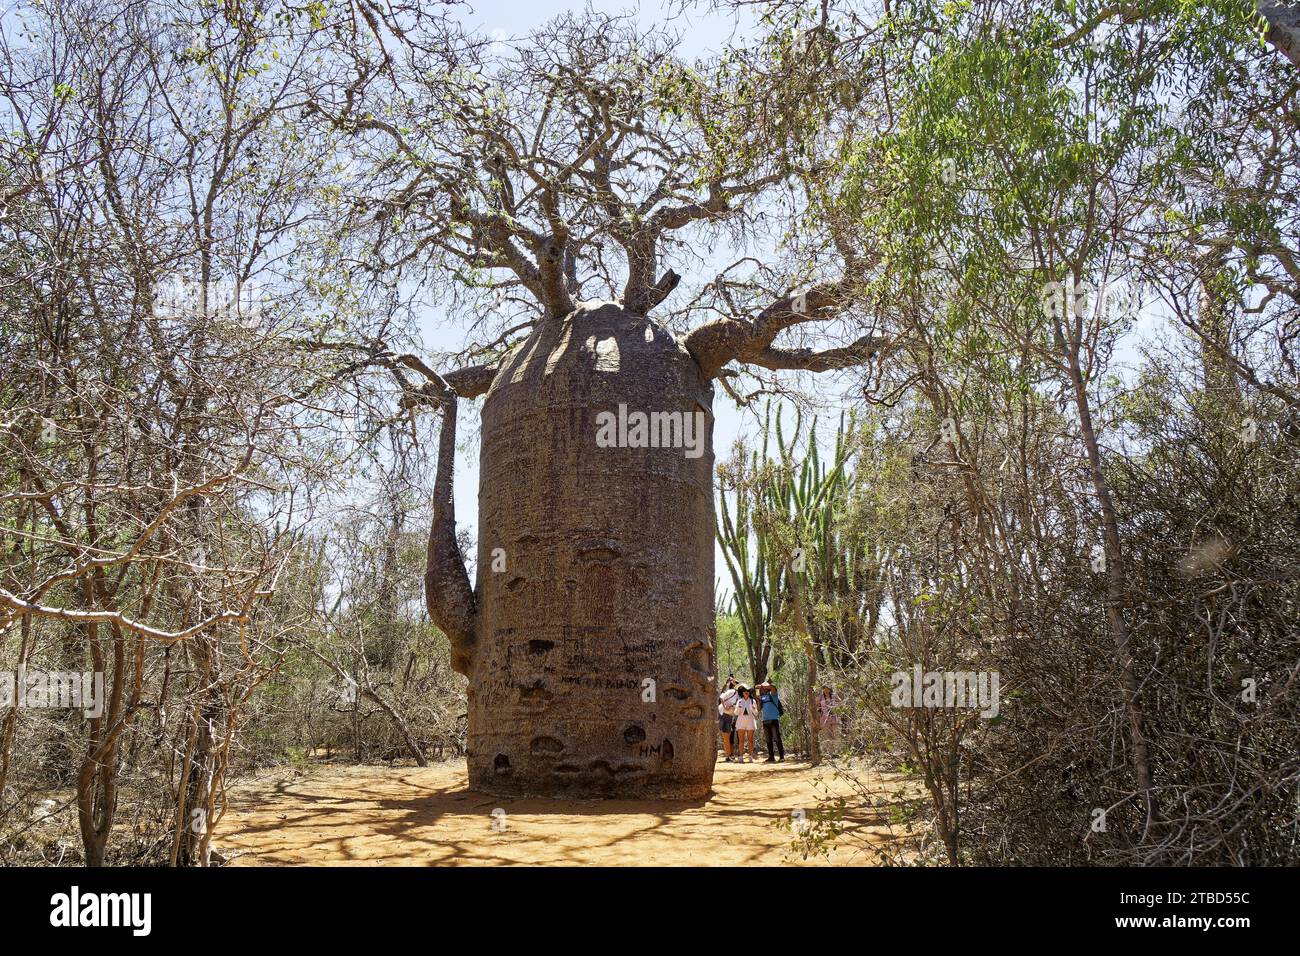 Baobab africain (adansonia digitata) dans la forêt d'épines, Ifaty, Madagascar Banque D'Images